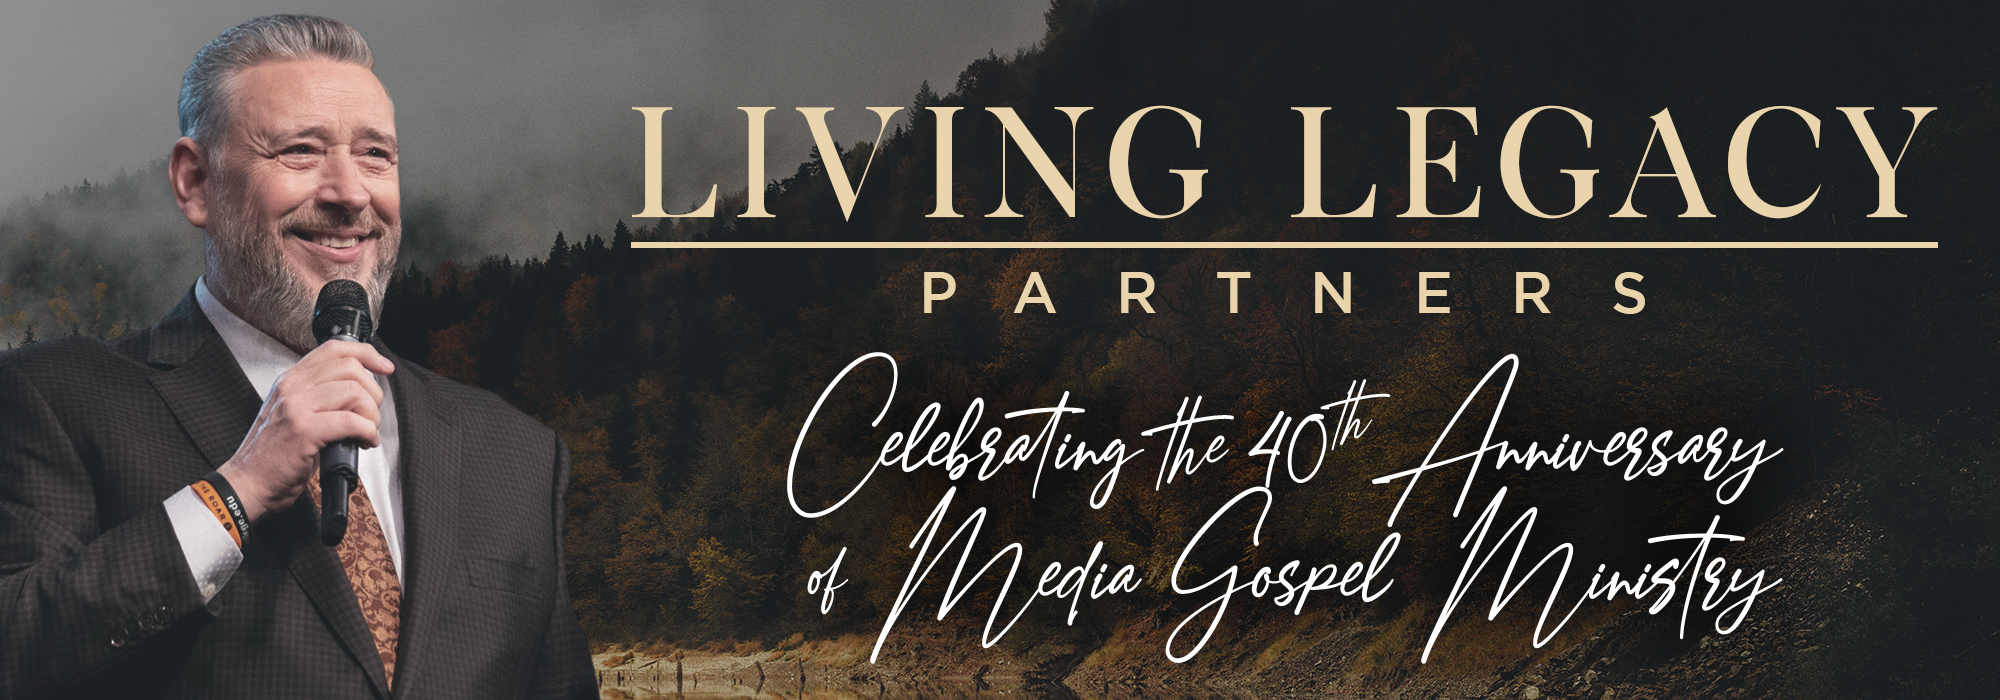 Living Legacy Partners Celebrating the 40th Anniversary of Media Gospel Ministry